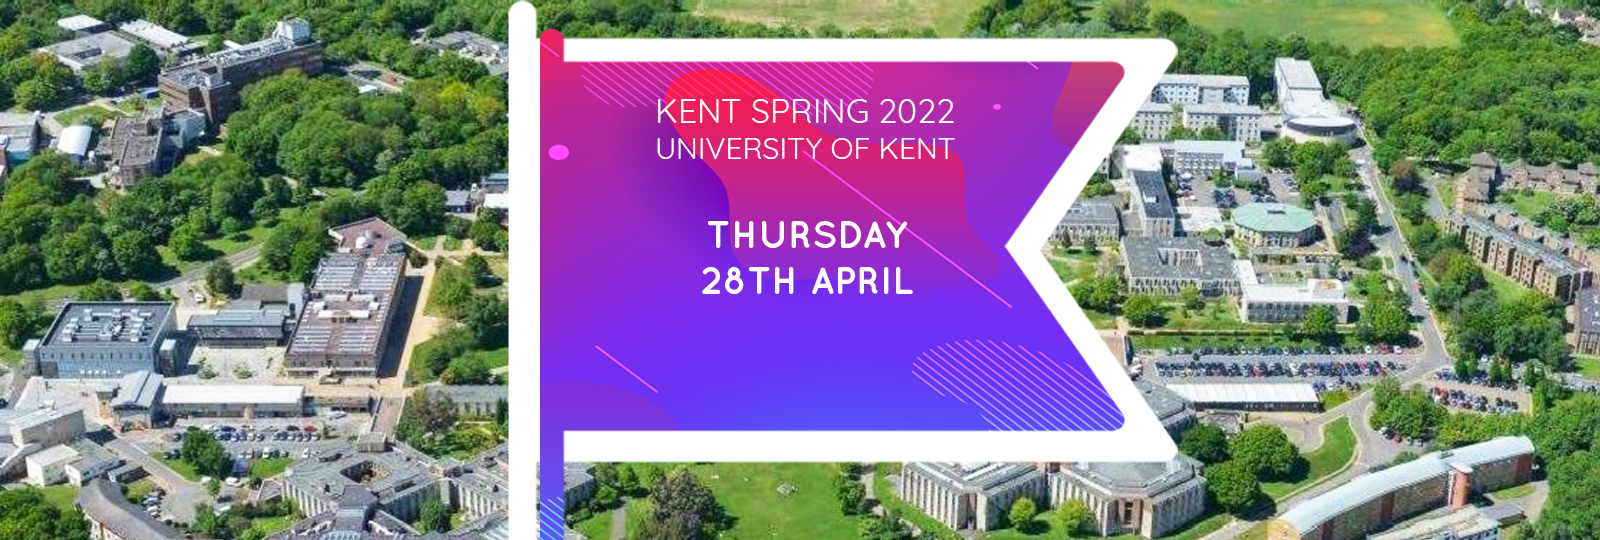 University of Kent Spring 2022 Fair